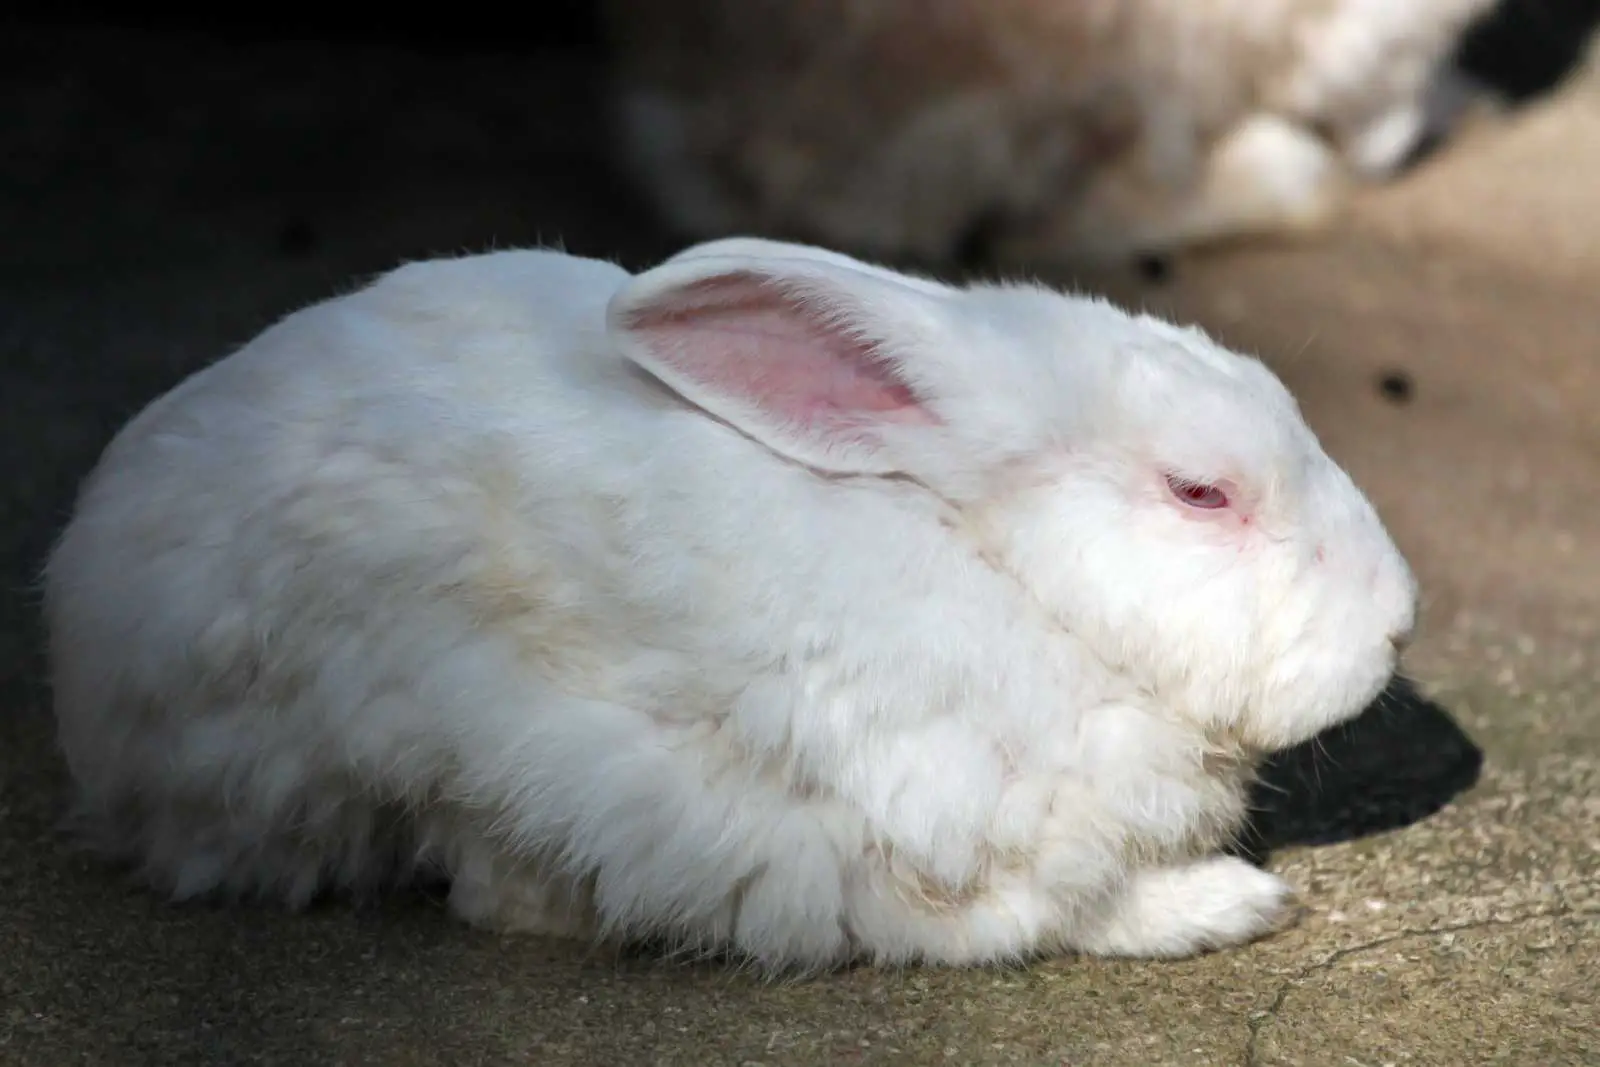 How long do rabbits sleep?